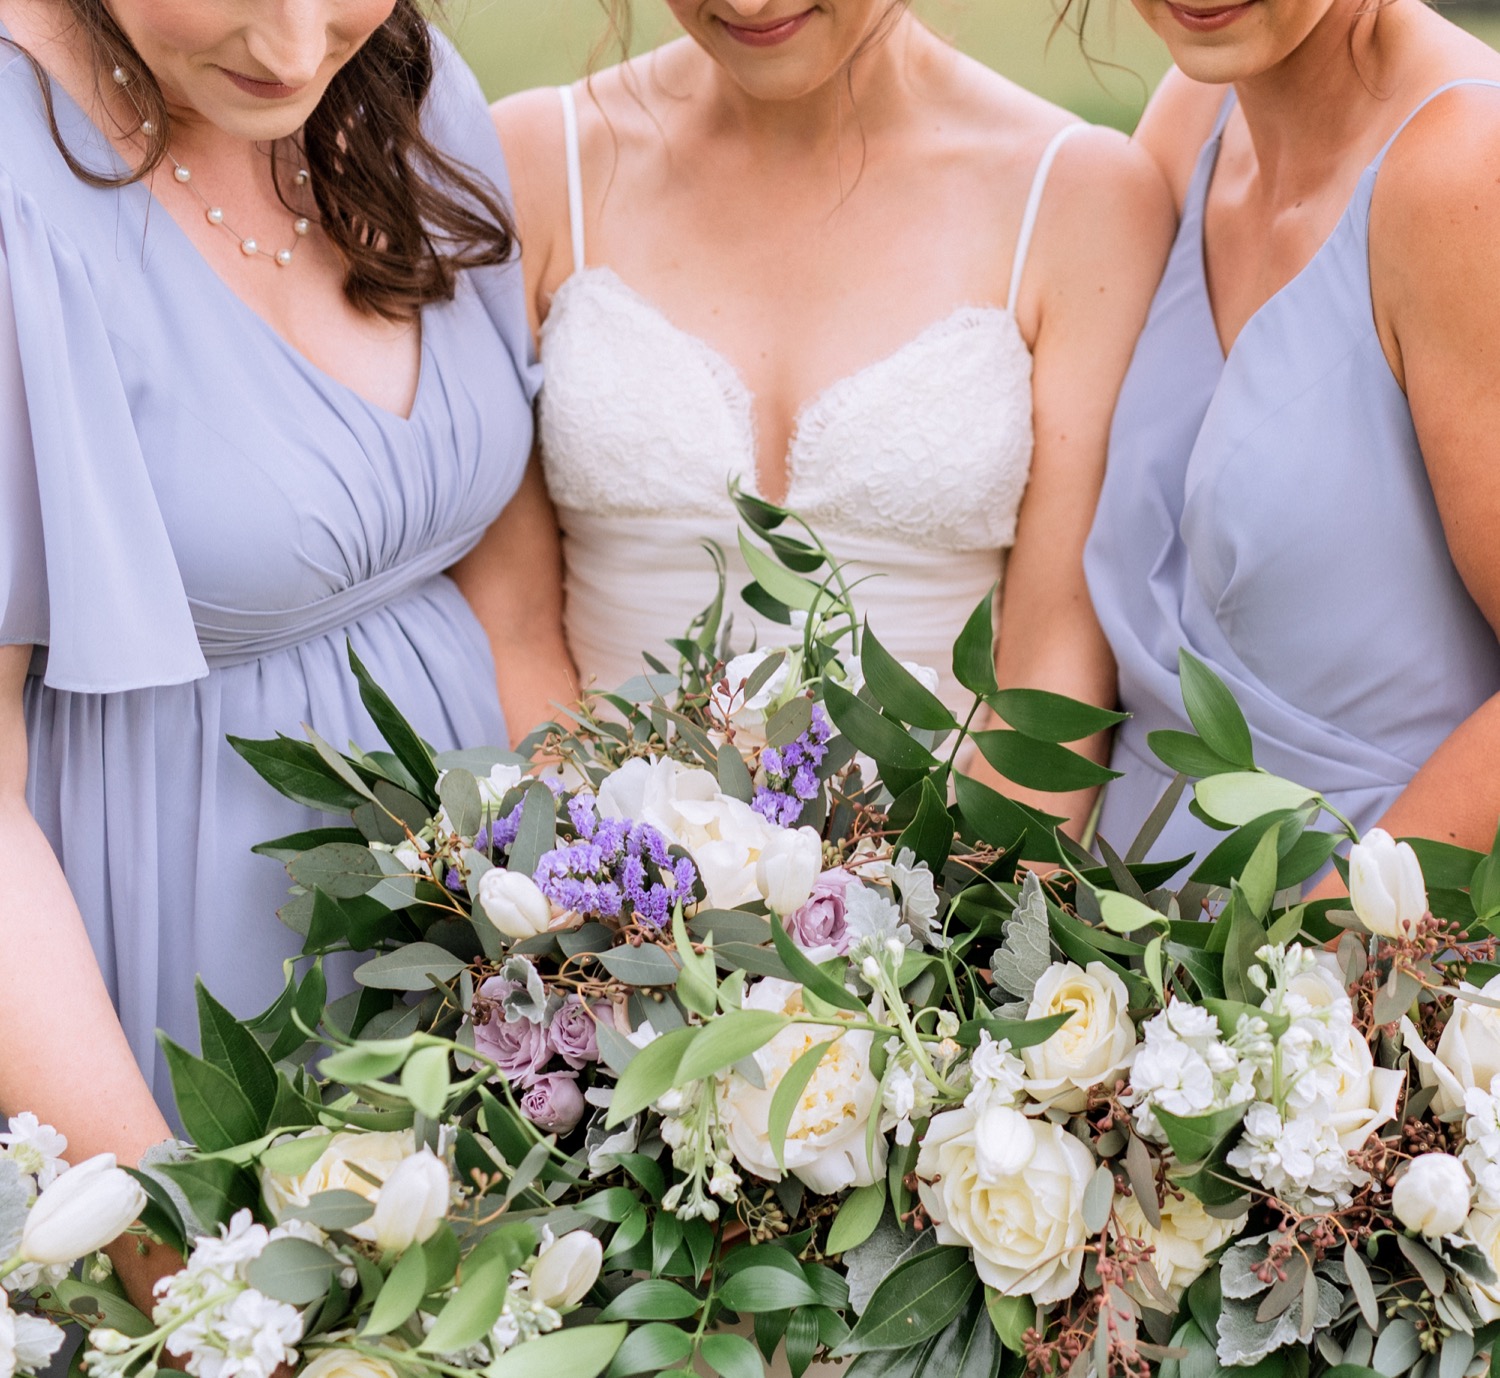 Bride & bridesmaids before wedding ceremony in Charlottesville, VA